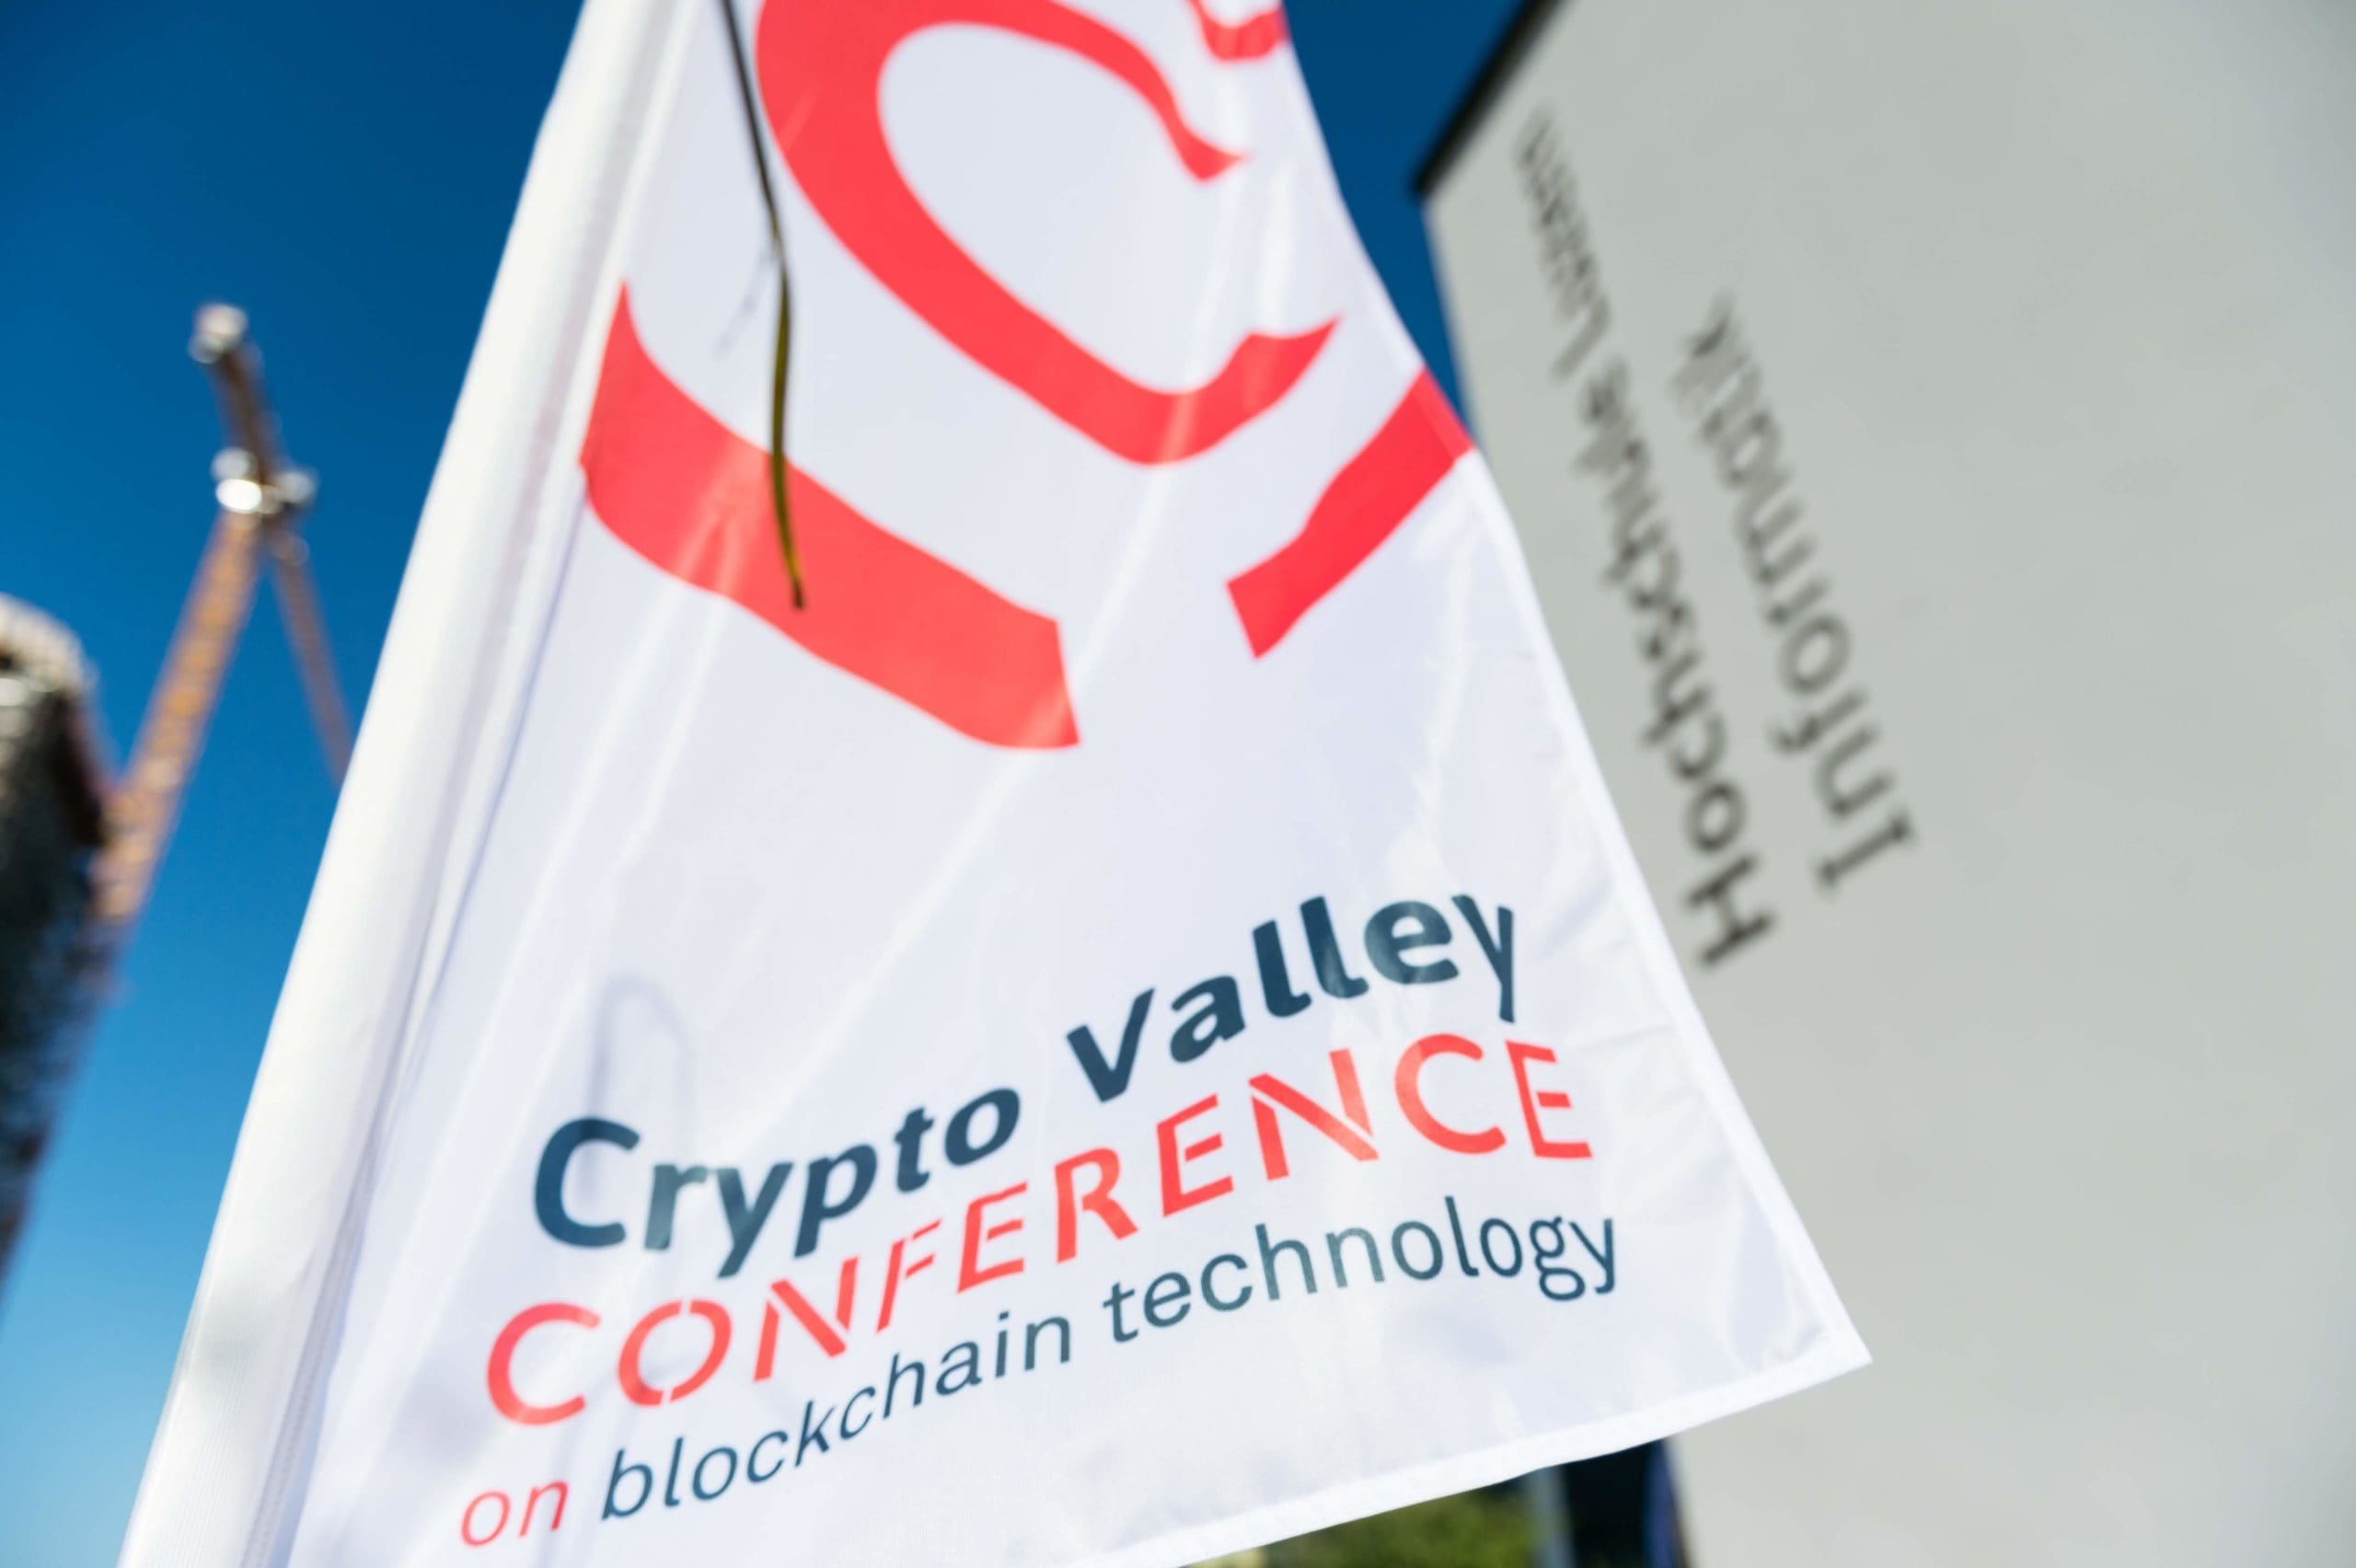 crypto valley meetup